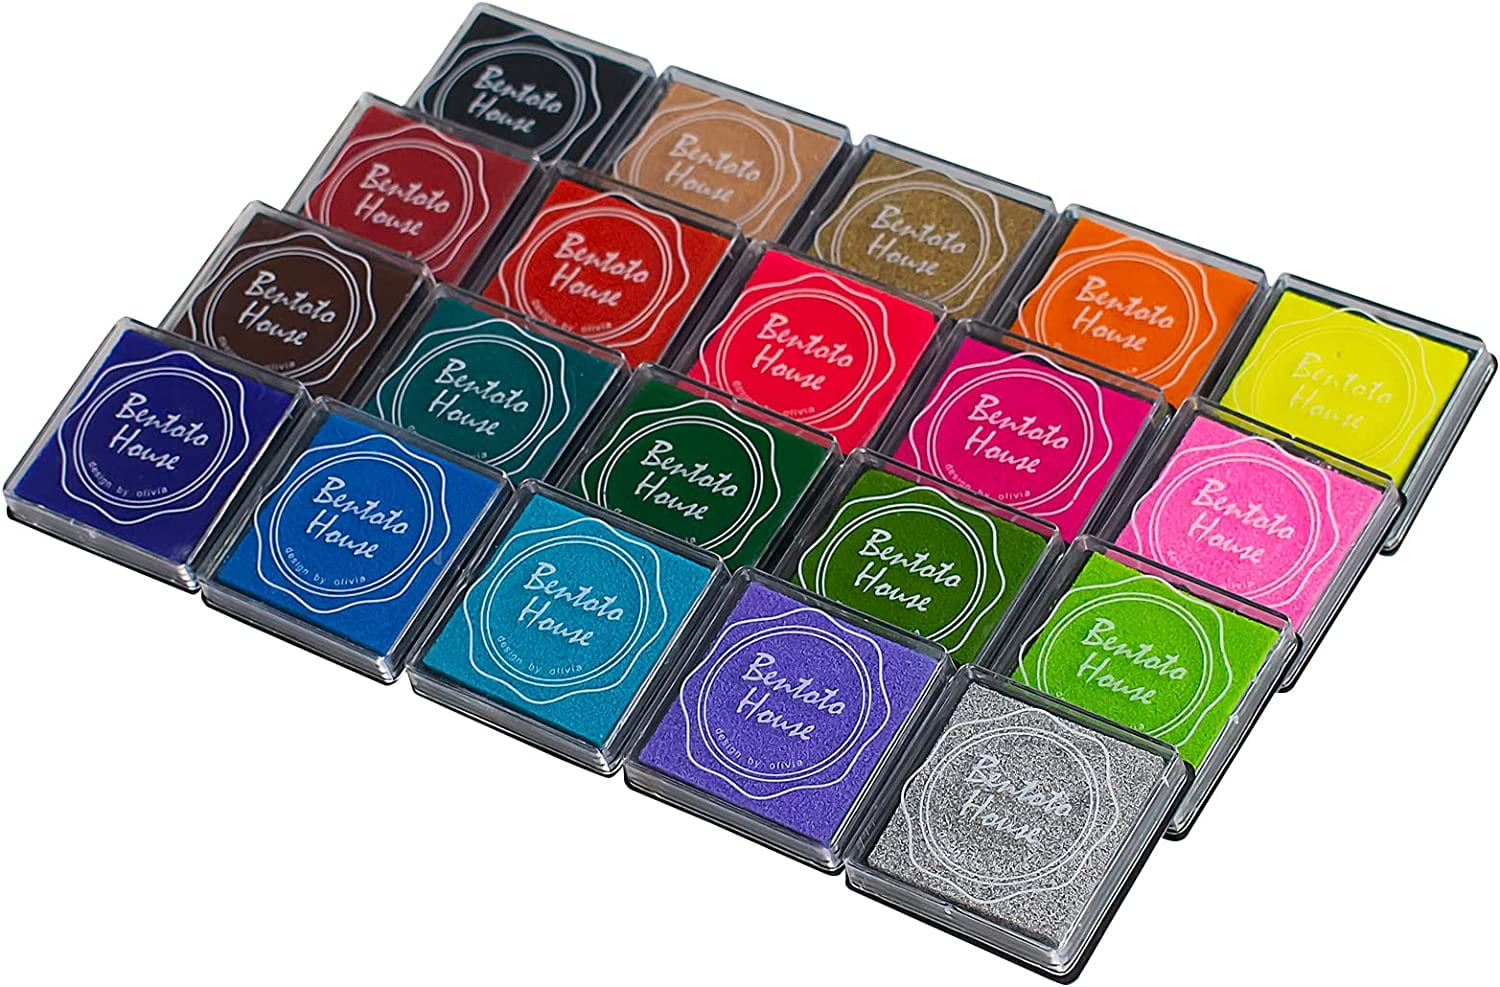 Bentoto House Vintage Stamp Ink Pad Set (20 colors) – Original Kawaii Pen